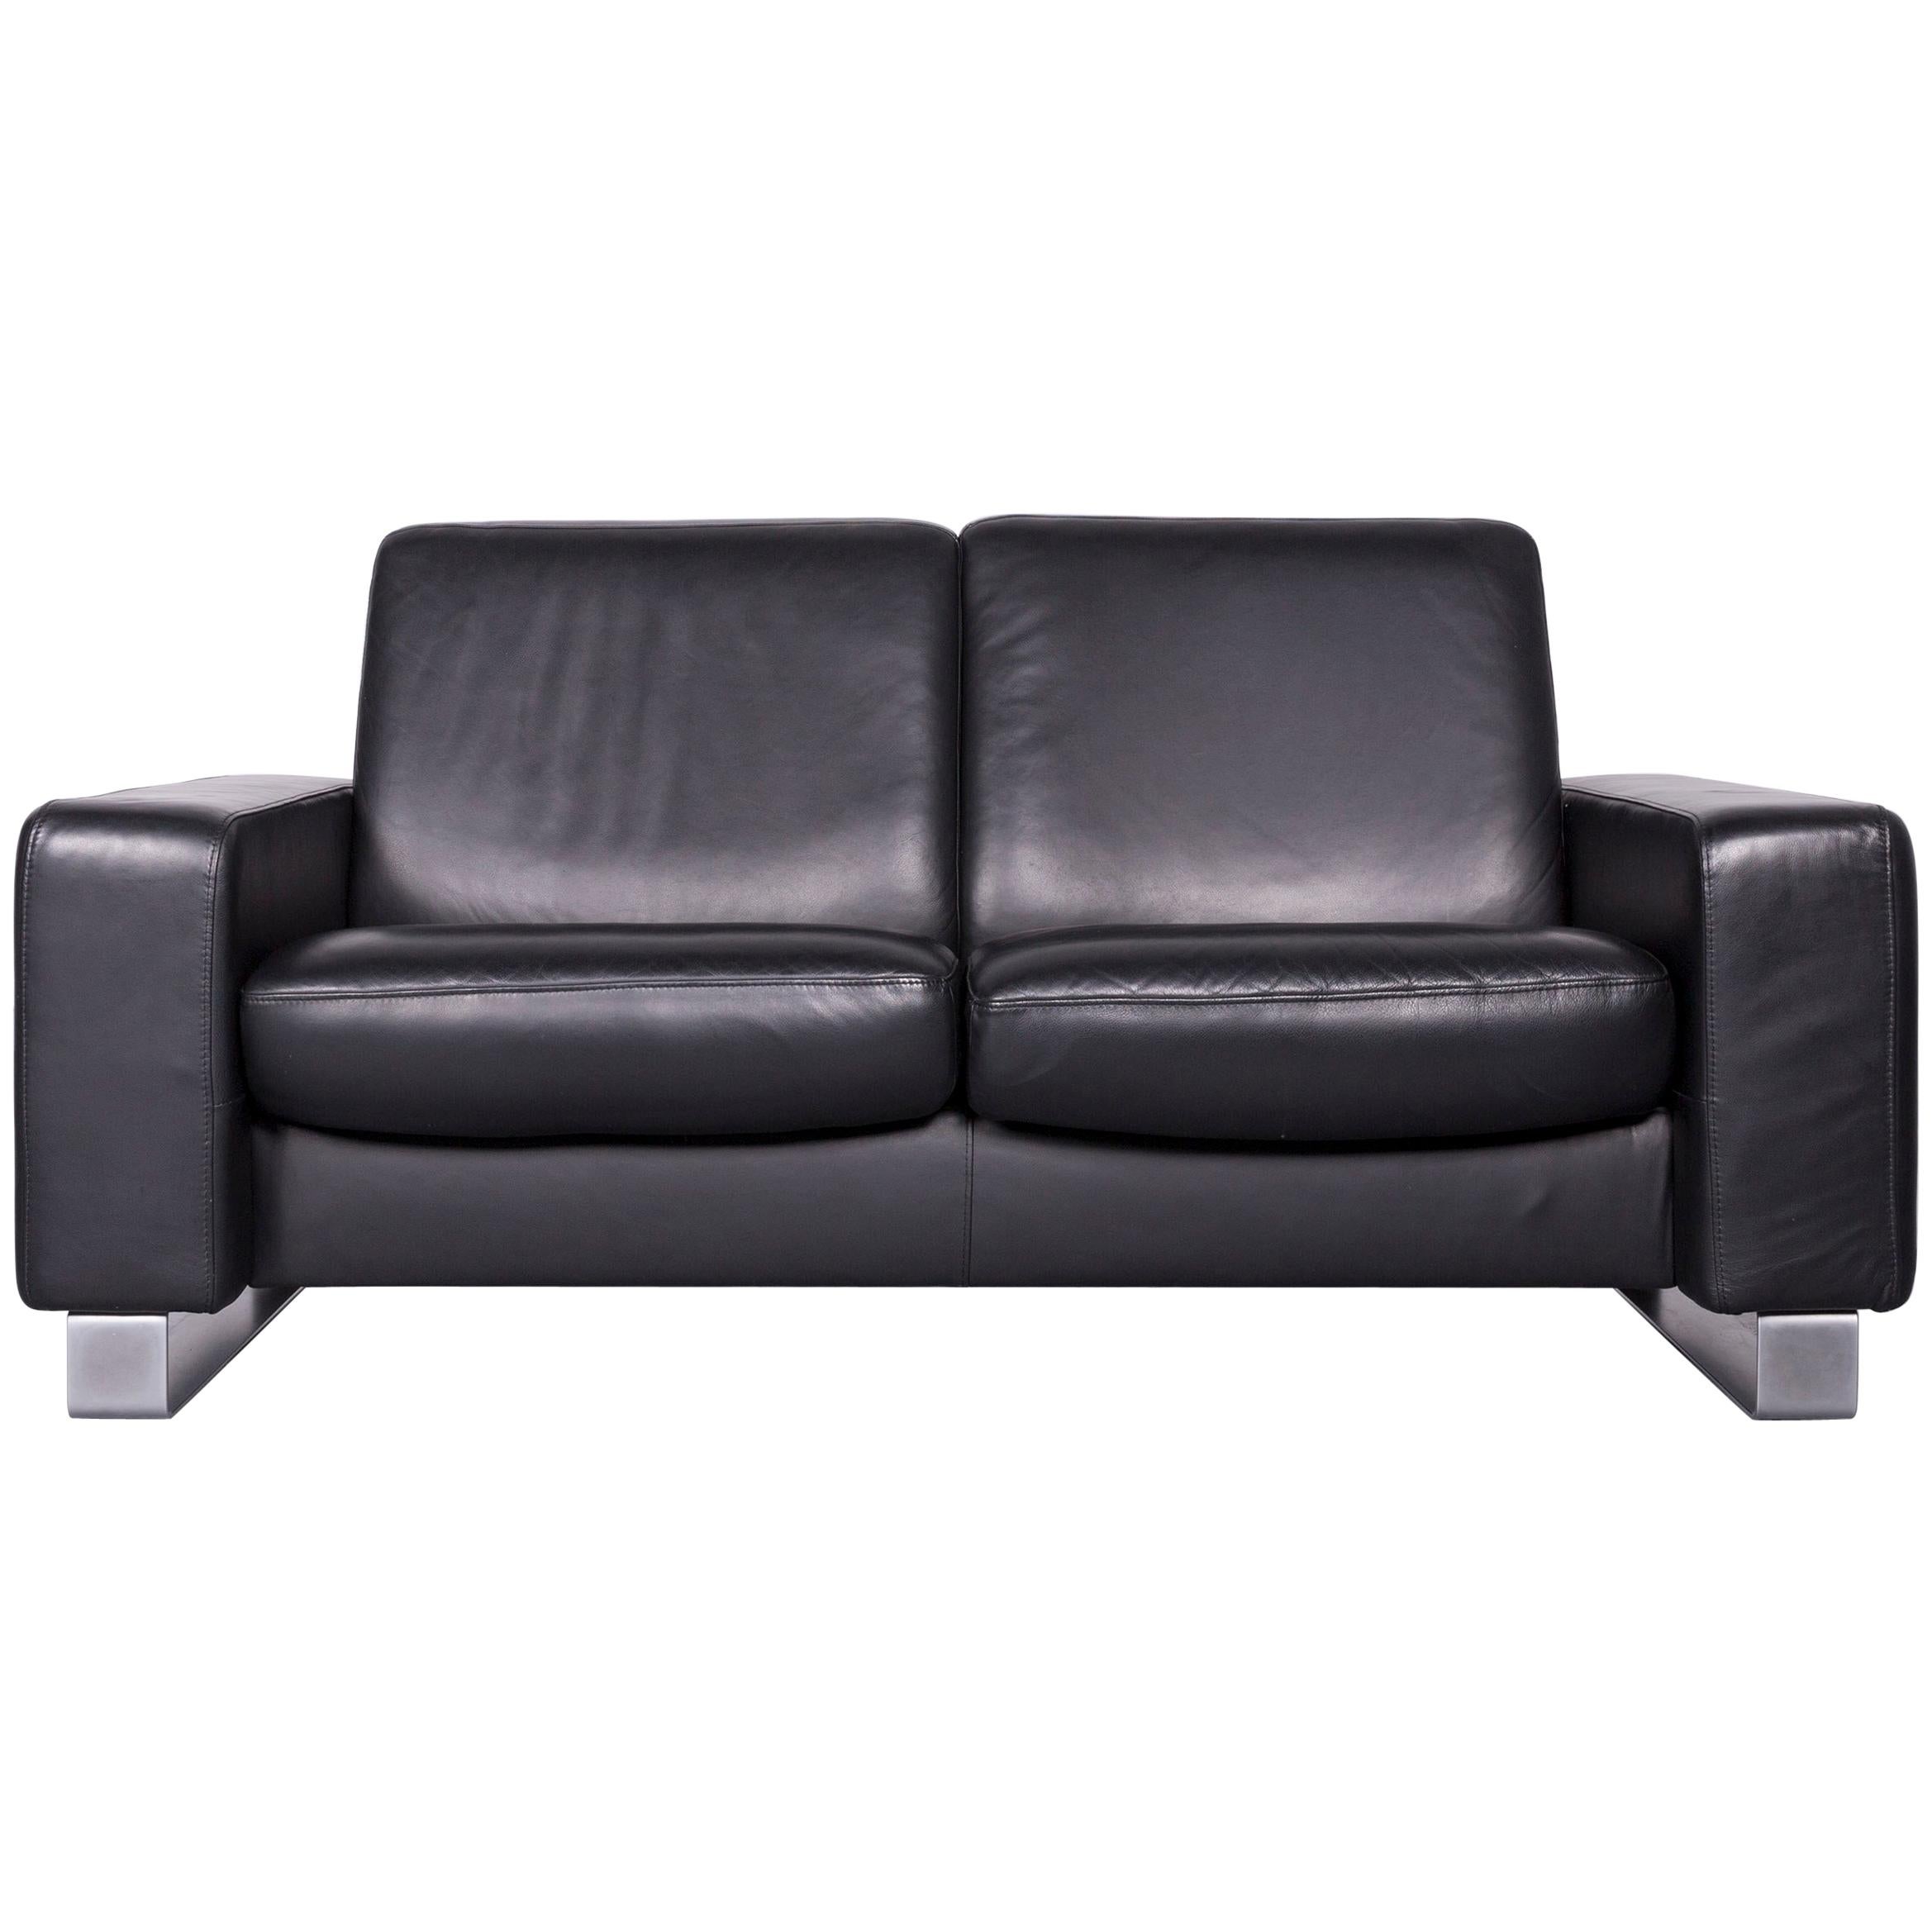 Ekornes Stressless Space Leather Sofa Black Recliner For Sale